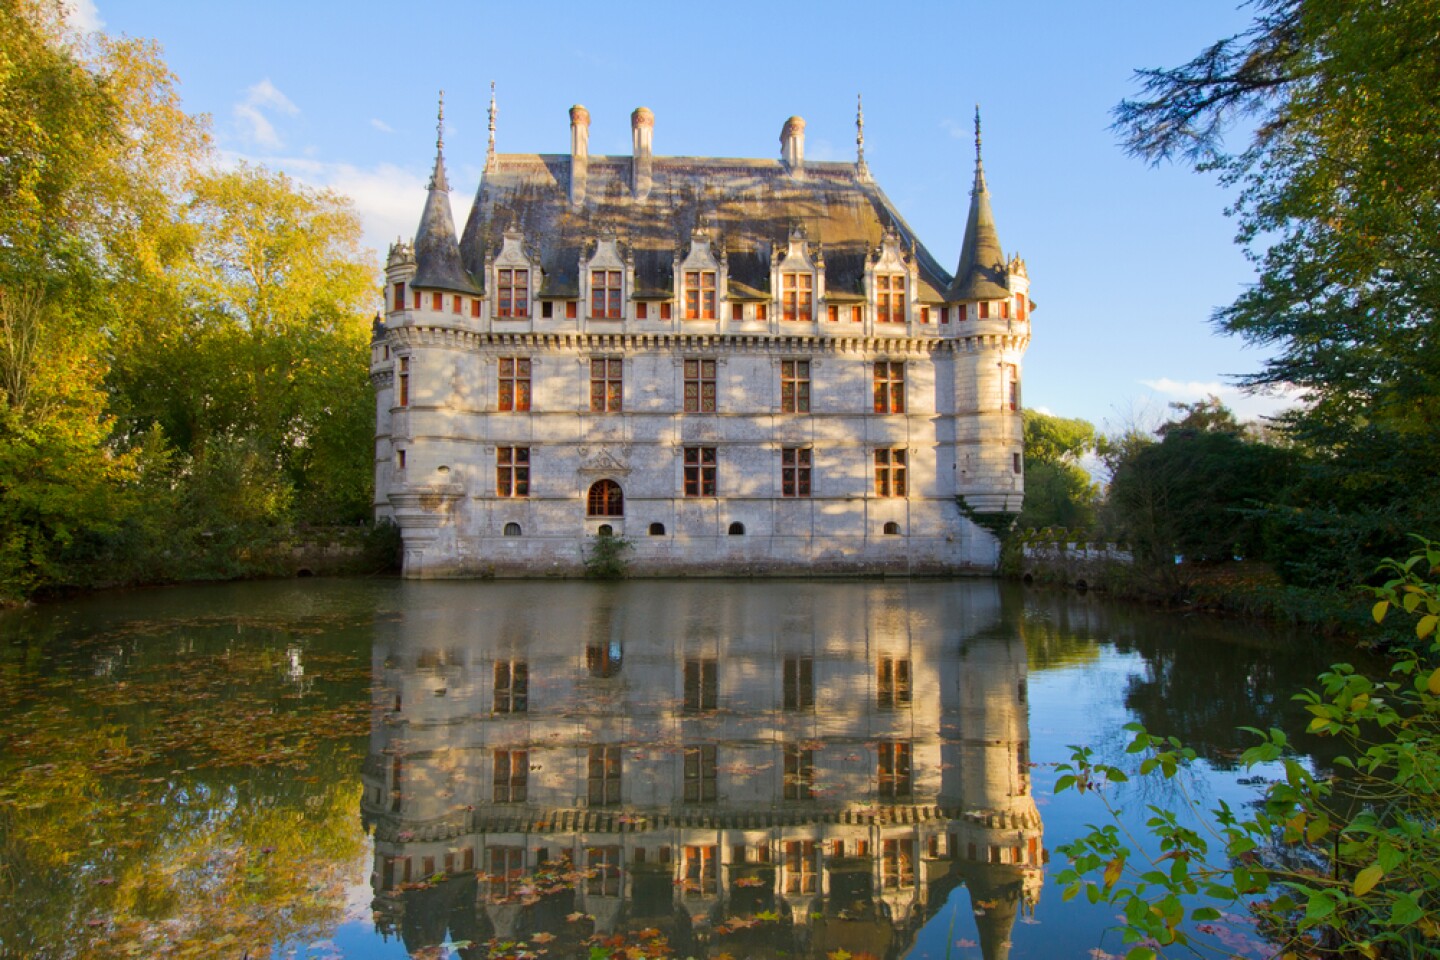 <a>Château d'Azay-le-Rideau showcases early French Renaissance design and architecture.</a>